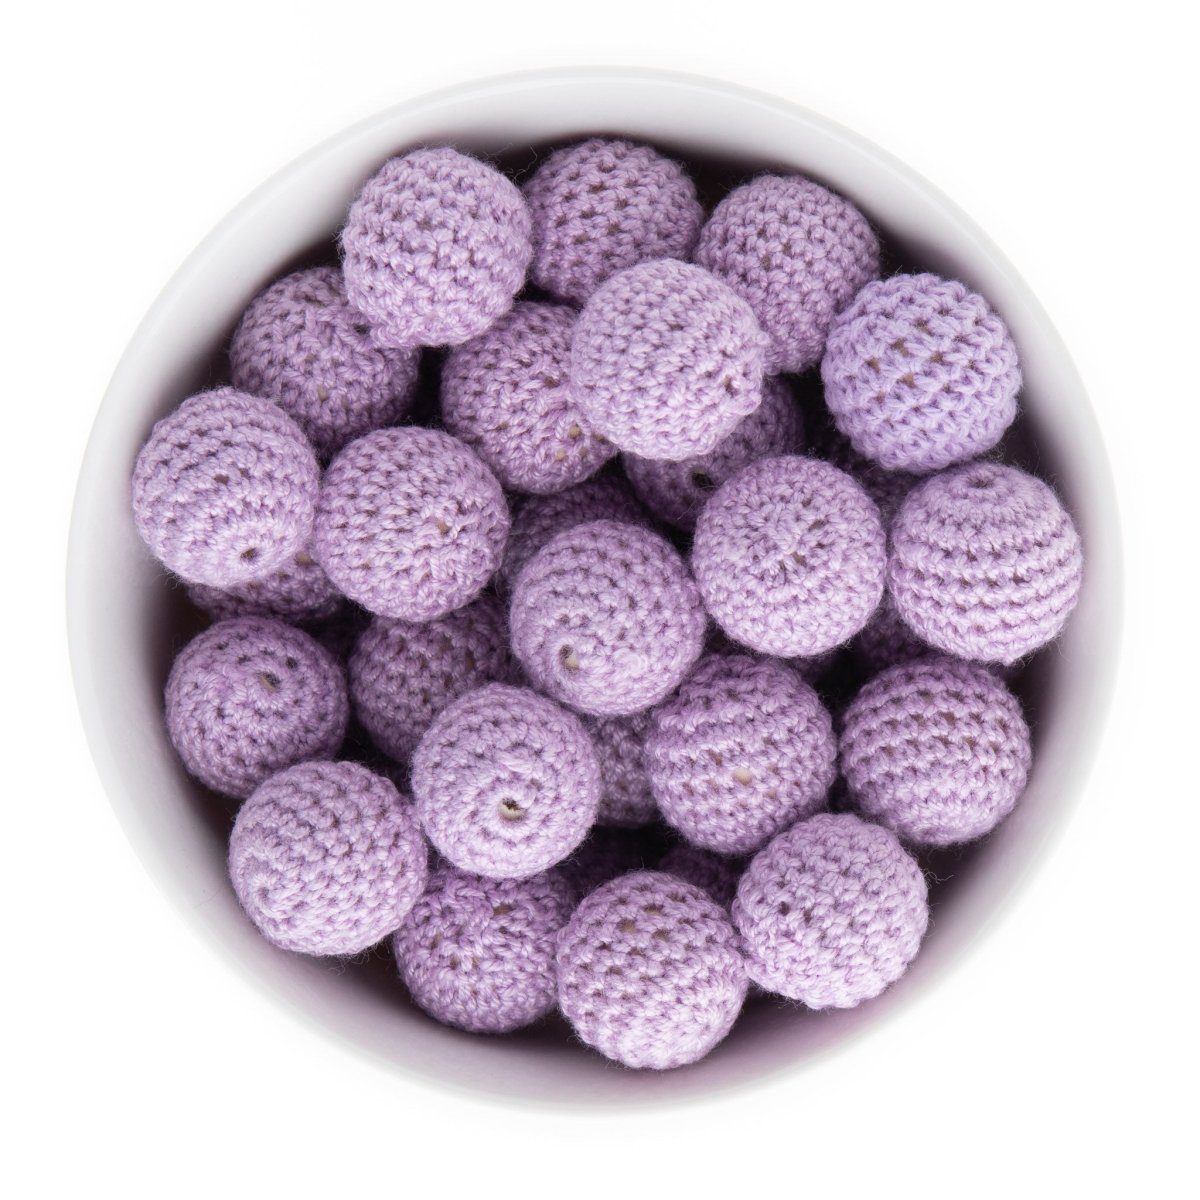 Felt & Crochet Beads 20mm Crochet Beads Lavender from Cara & Co Craft Supply